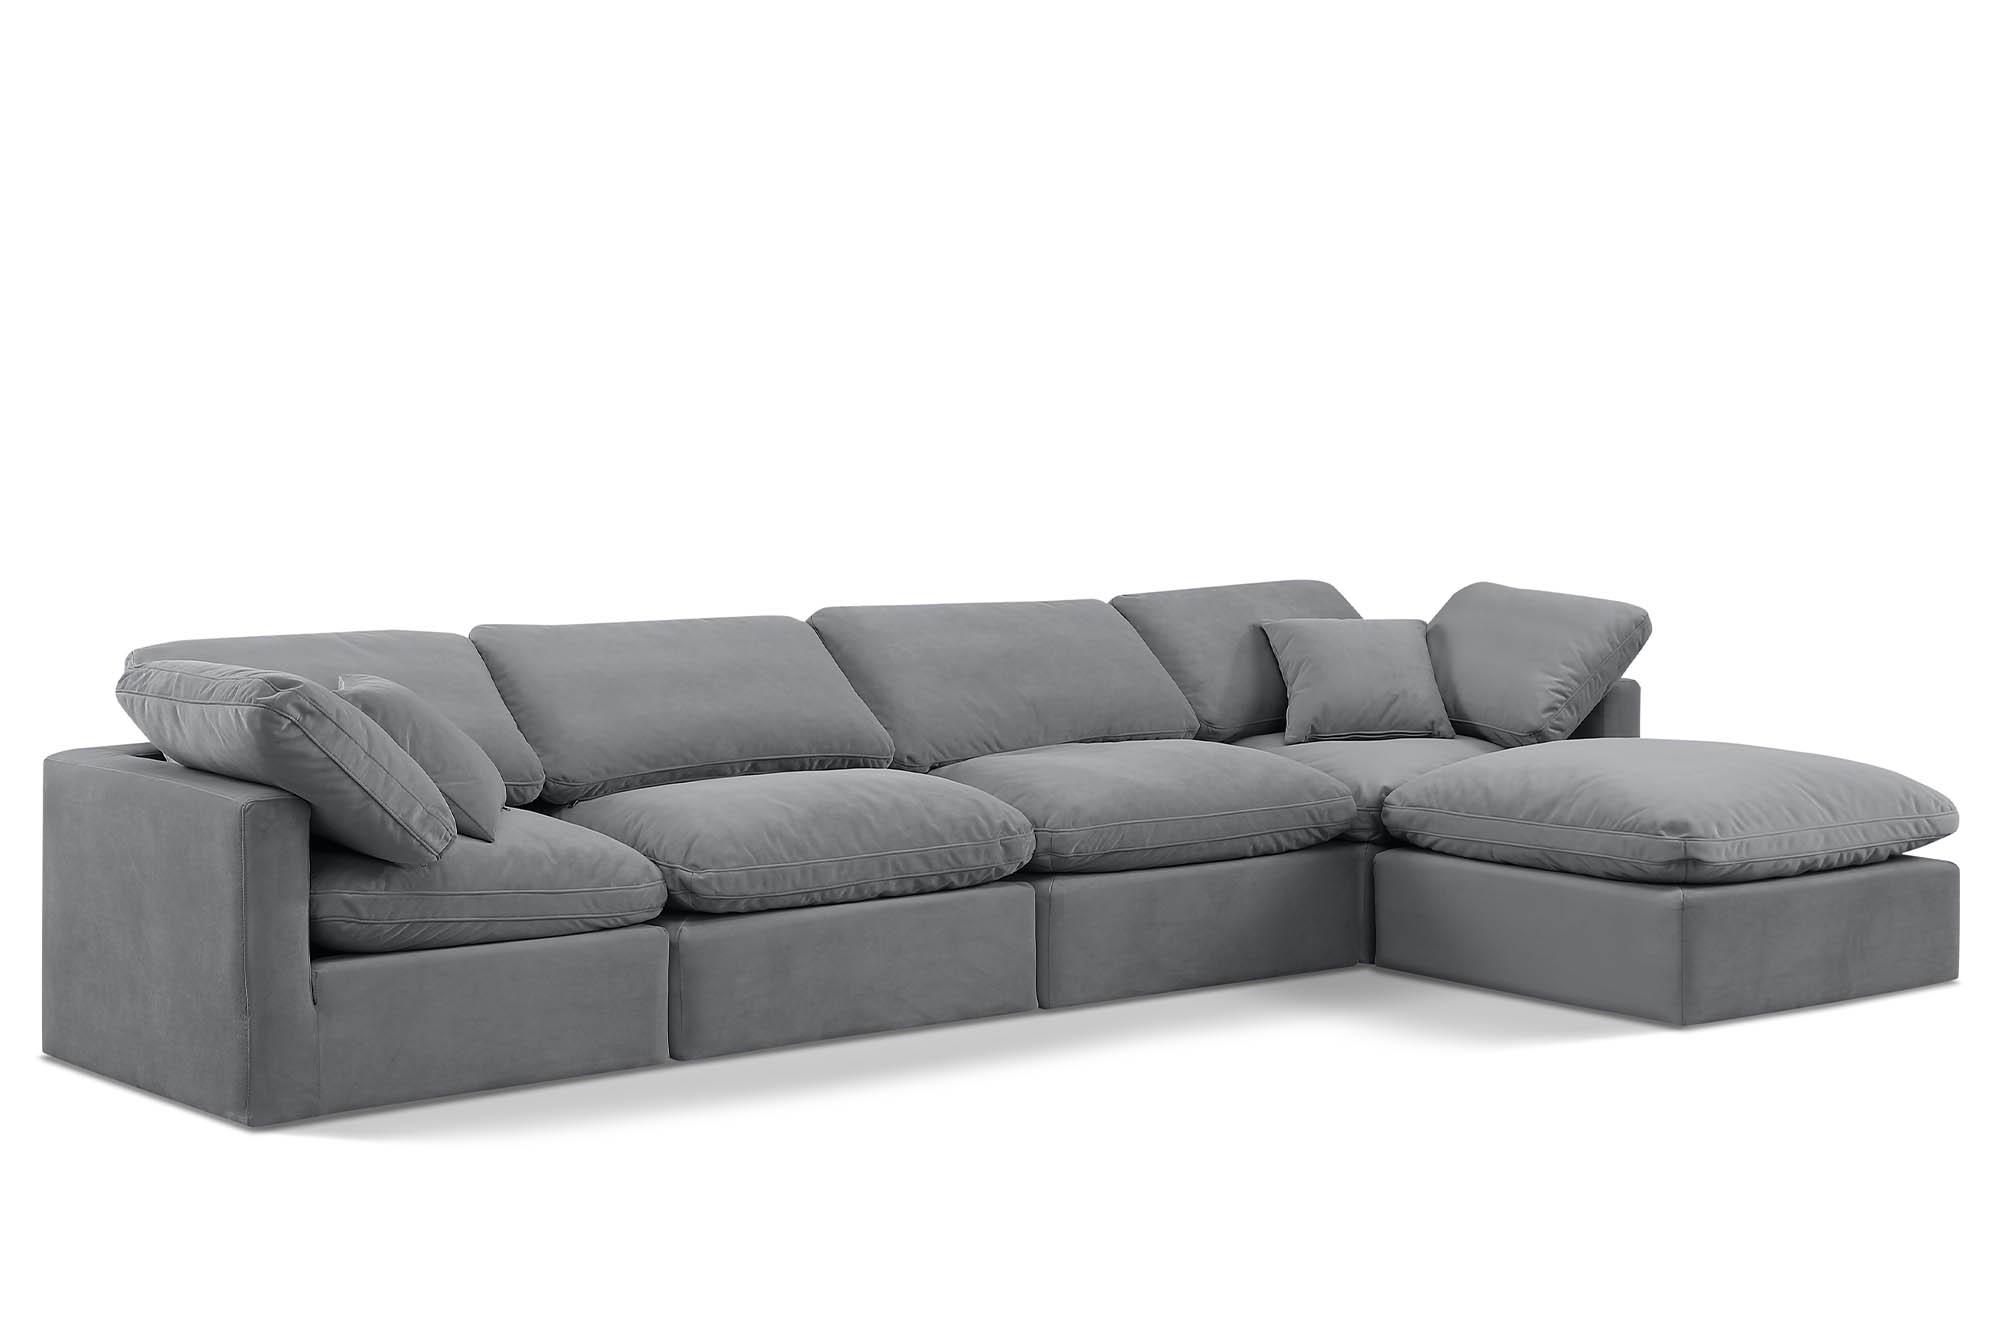 Contemporary, Modern Modular Sectional Sofa INDULGE 147Grey-Sec5A 147Grey-Sec5A in Gray Velvet